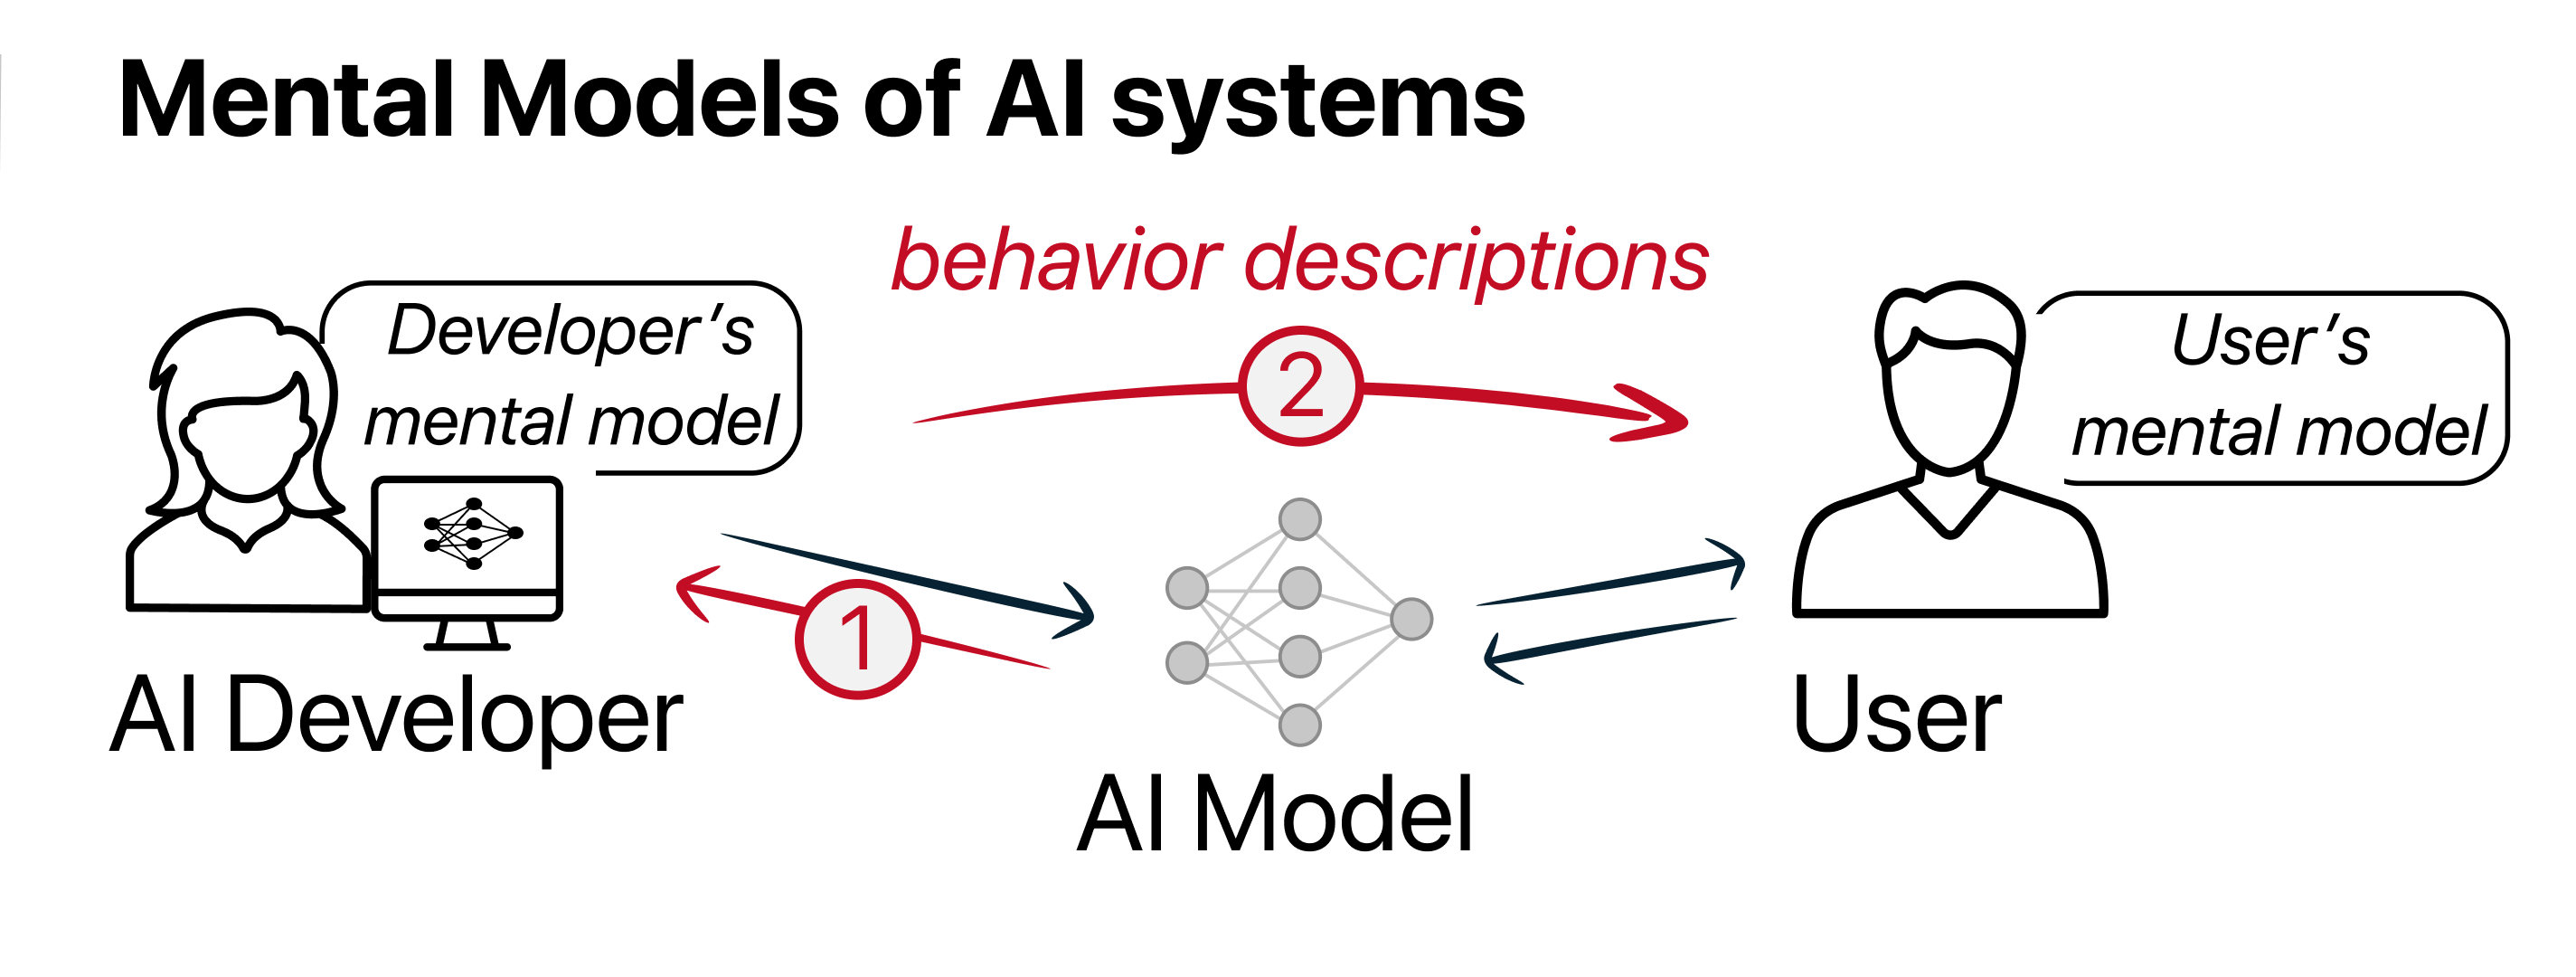 Improving Human-AI Collaboration with Descriptions of AI Behavior